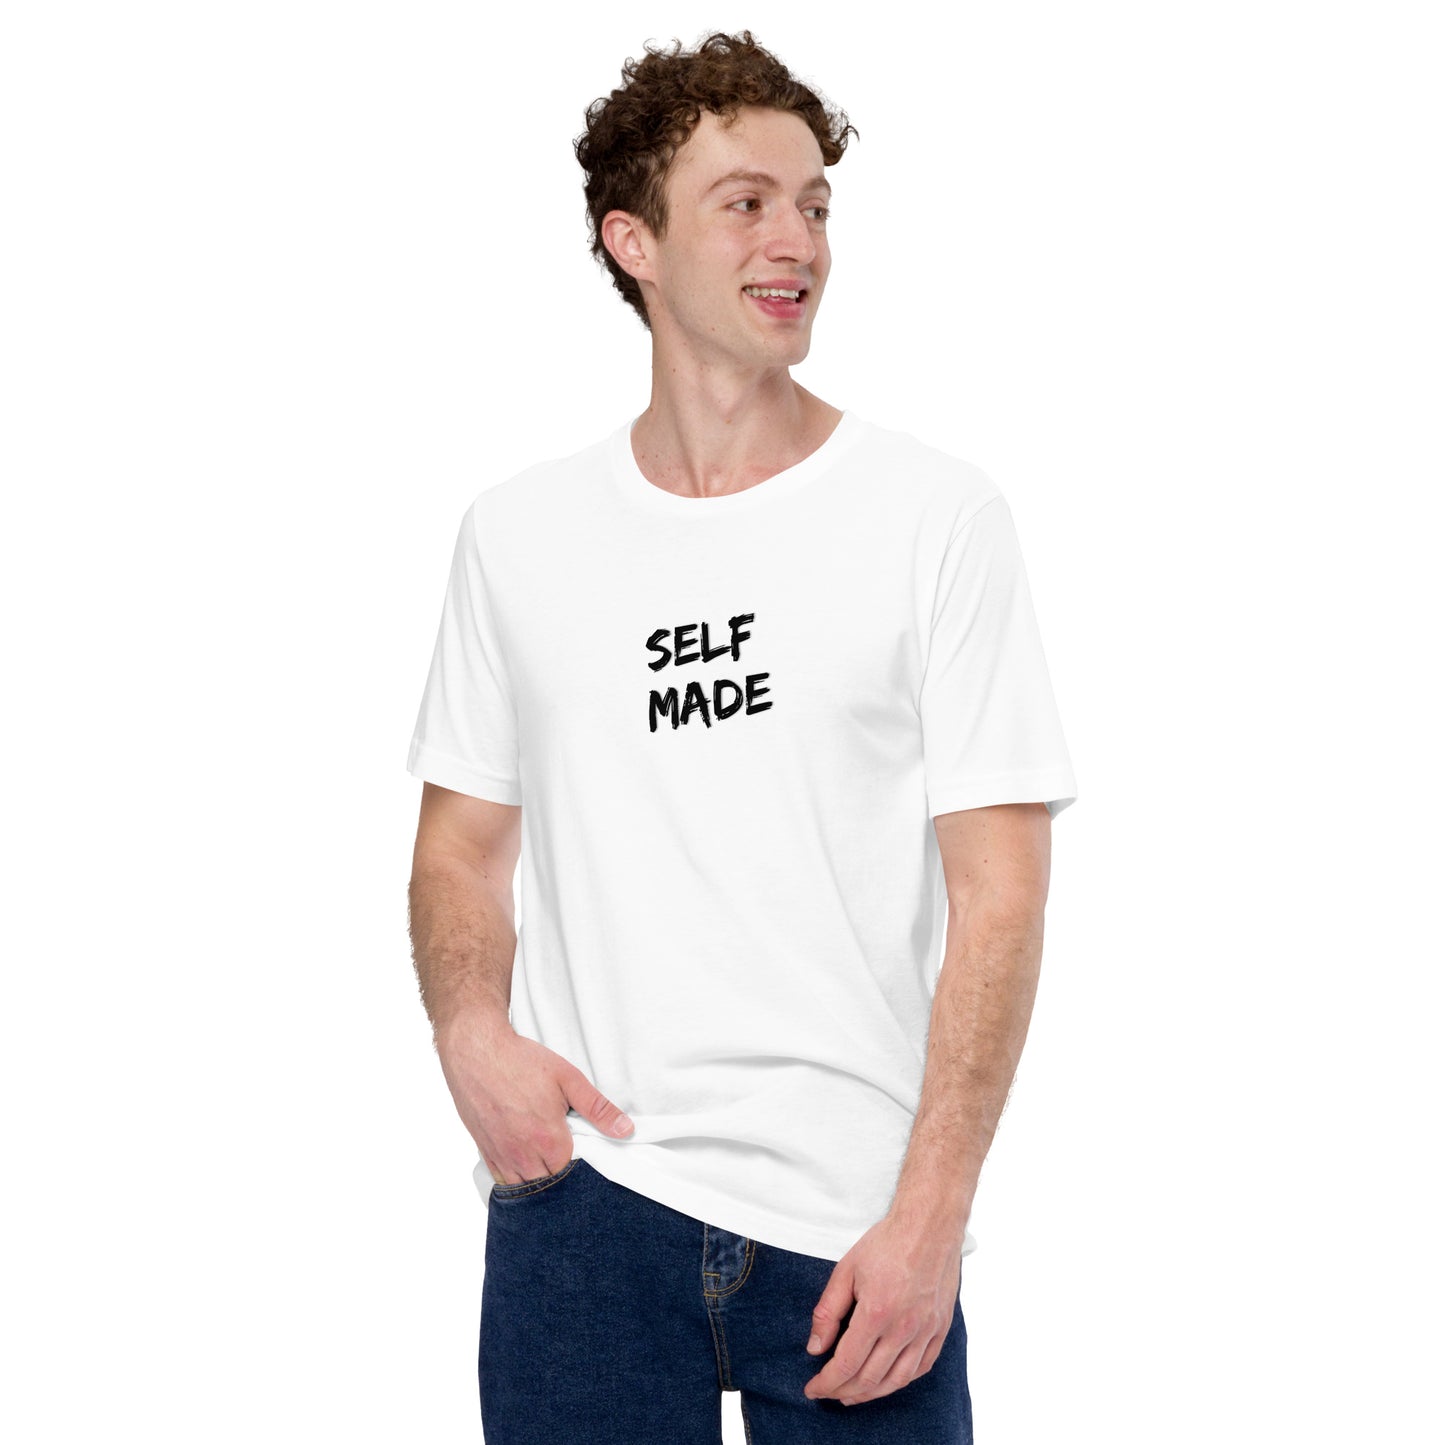 Self Made - Black Text - Unisex T-Shirt